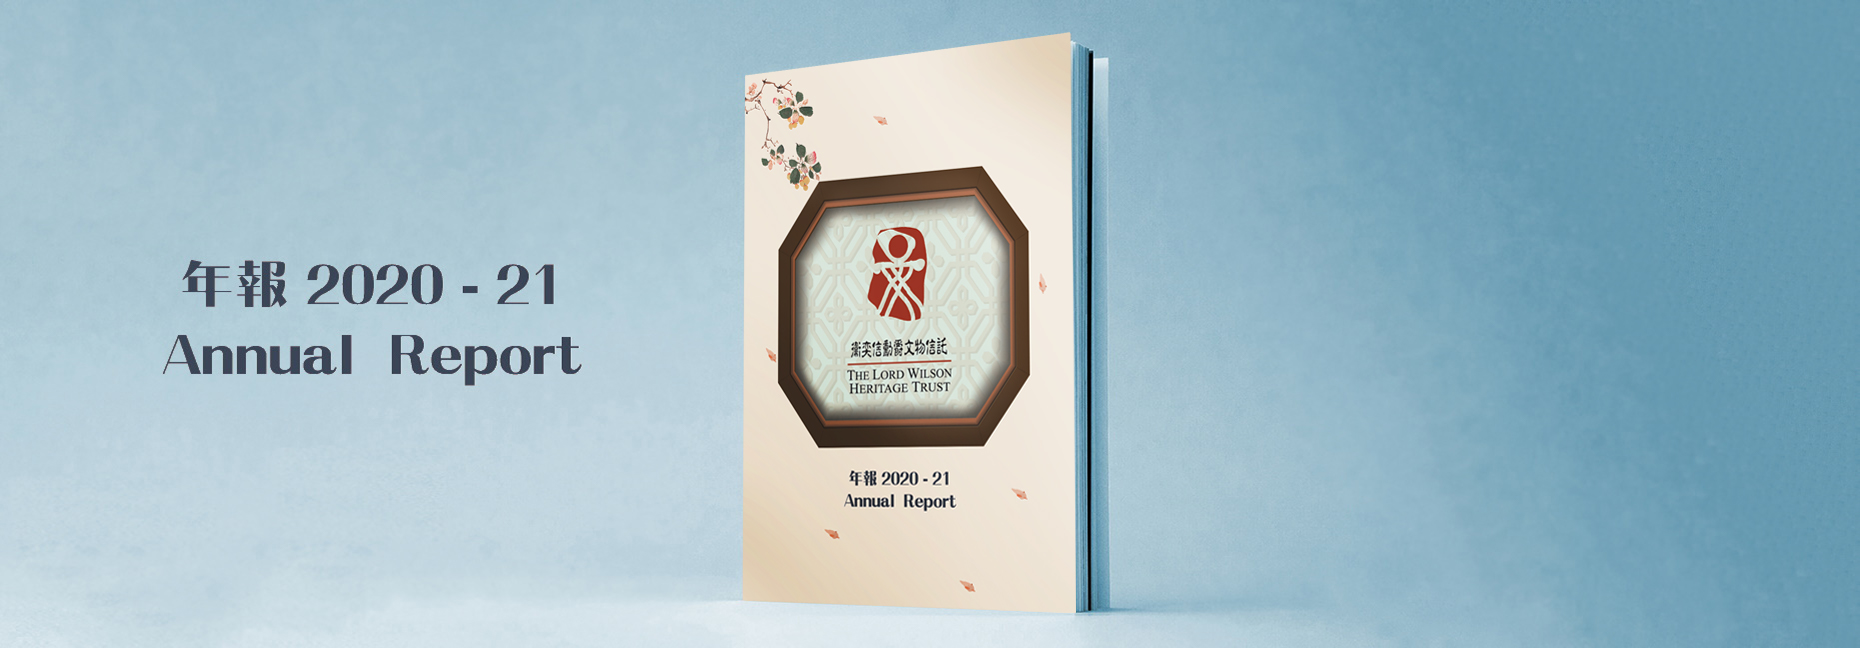 Annual Report 2020 - 21